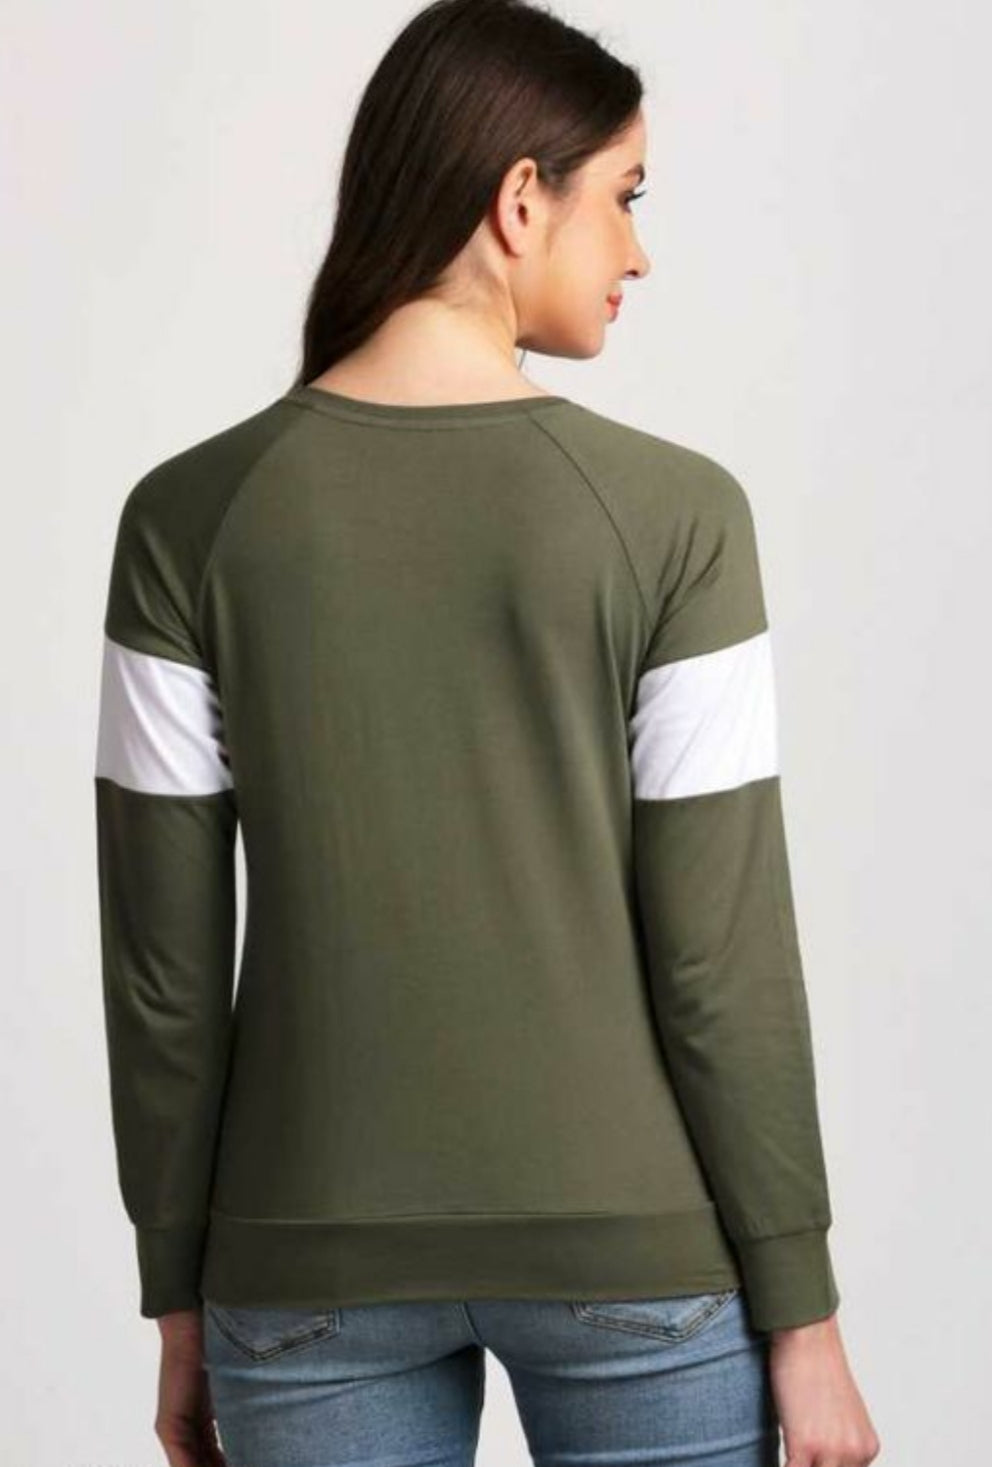 StyleIcon Full-Sleeves Tshirt For Women.